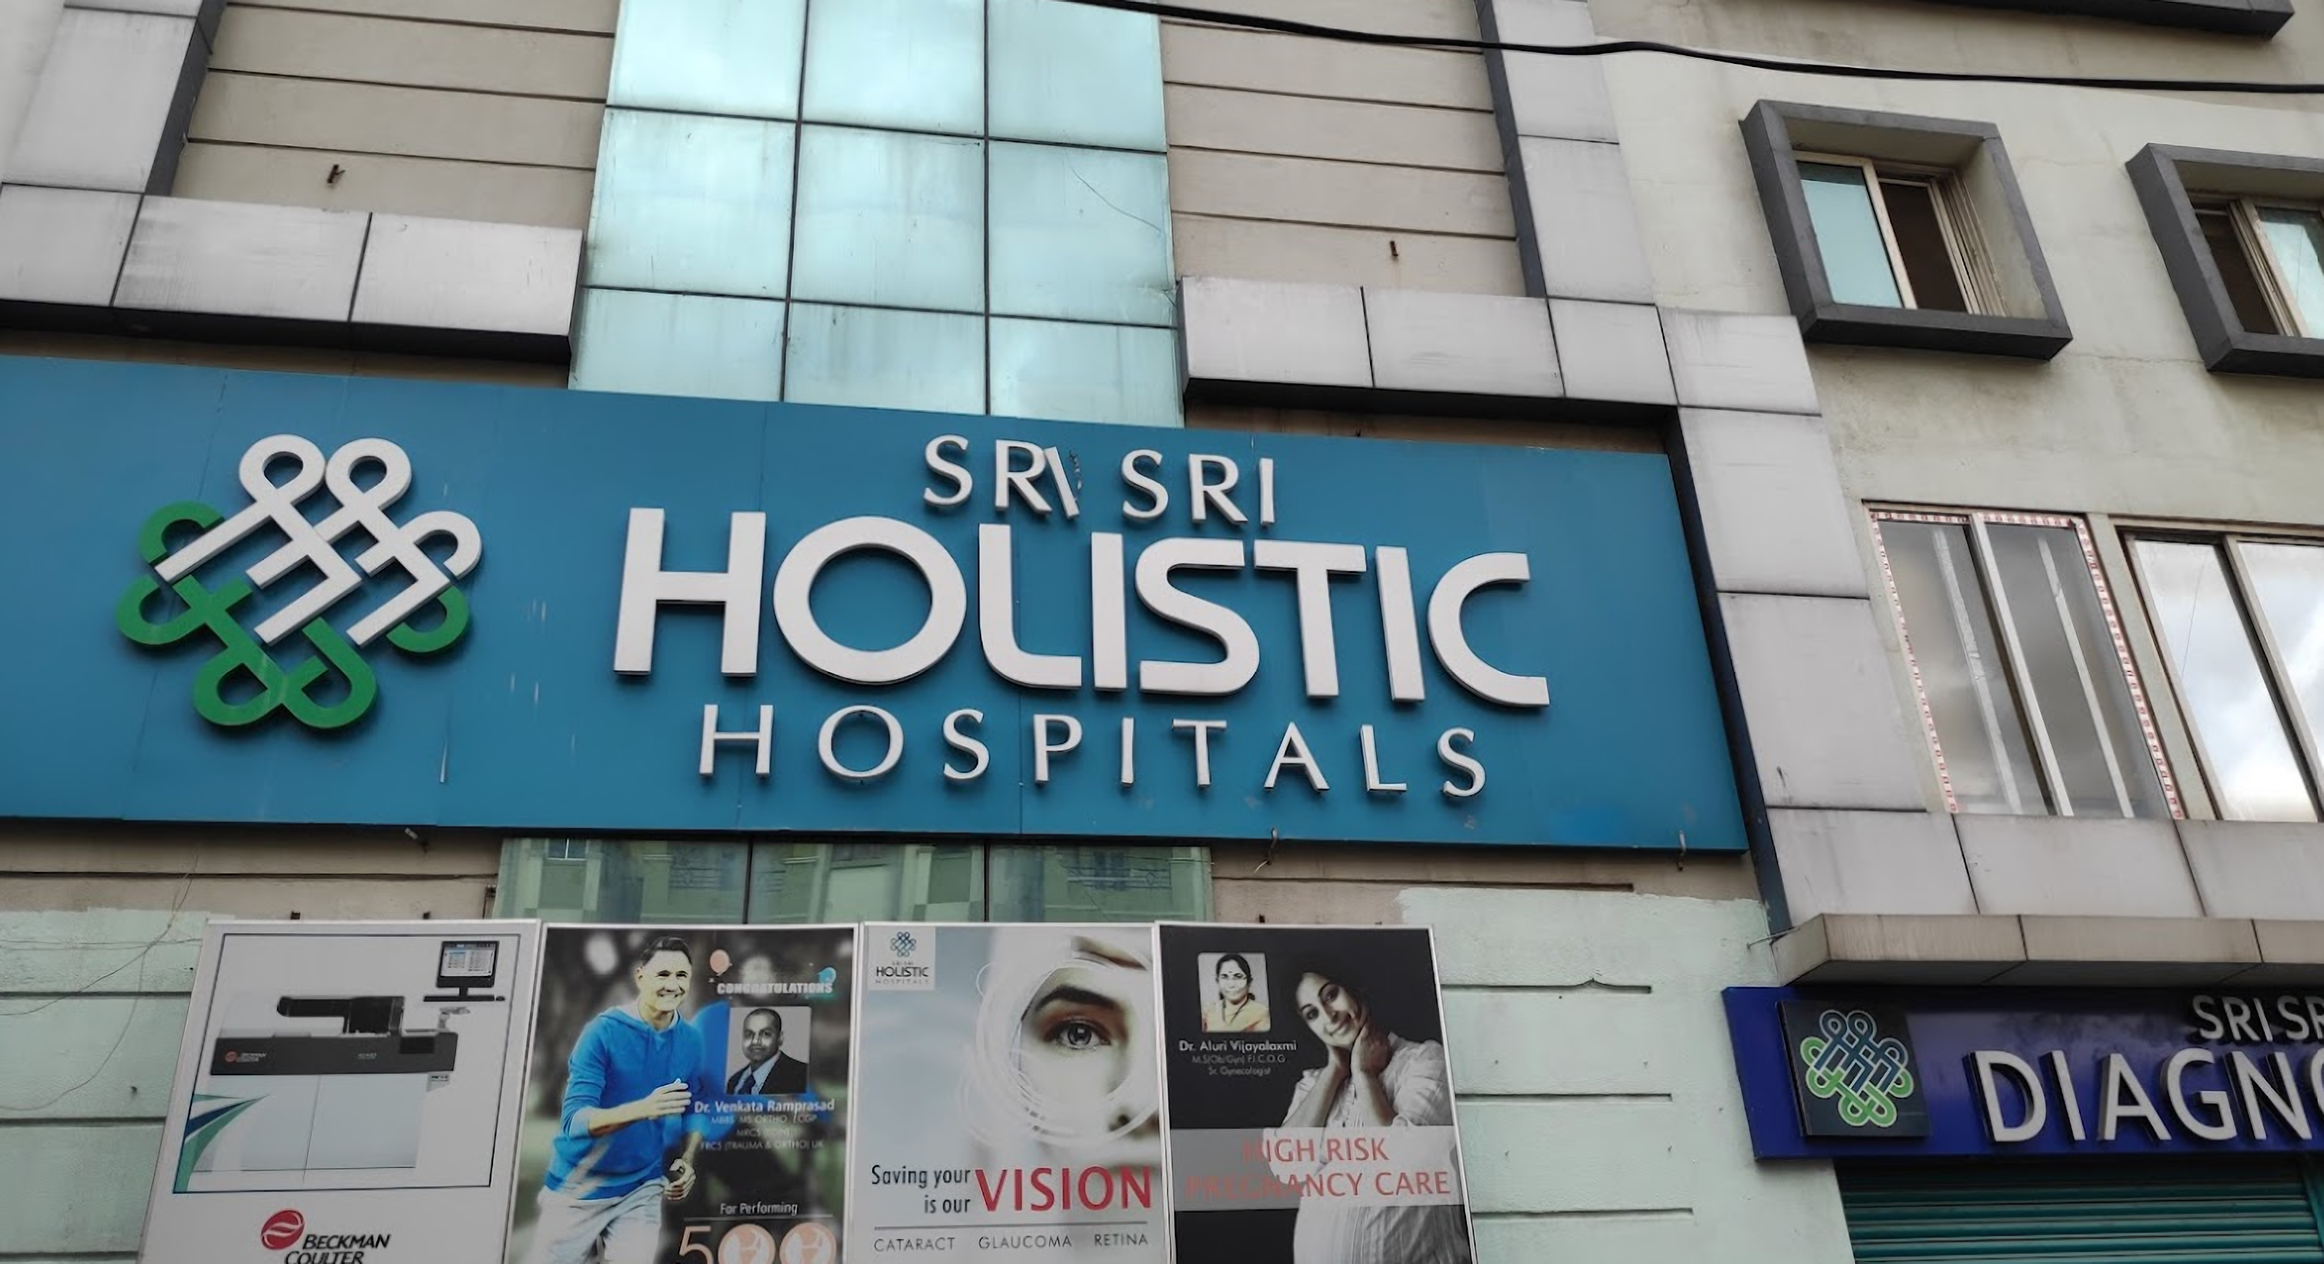 Sri Sri Holistic Hospitals photo